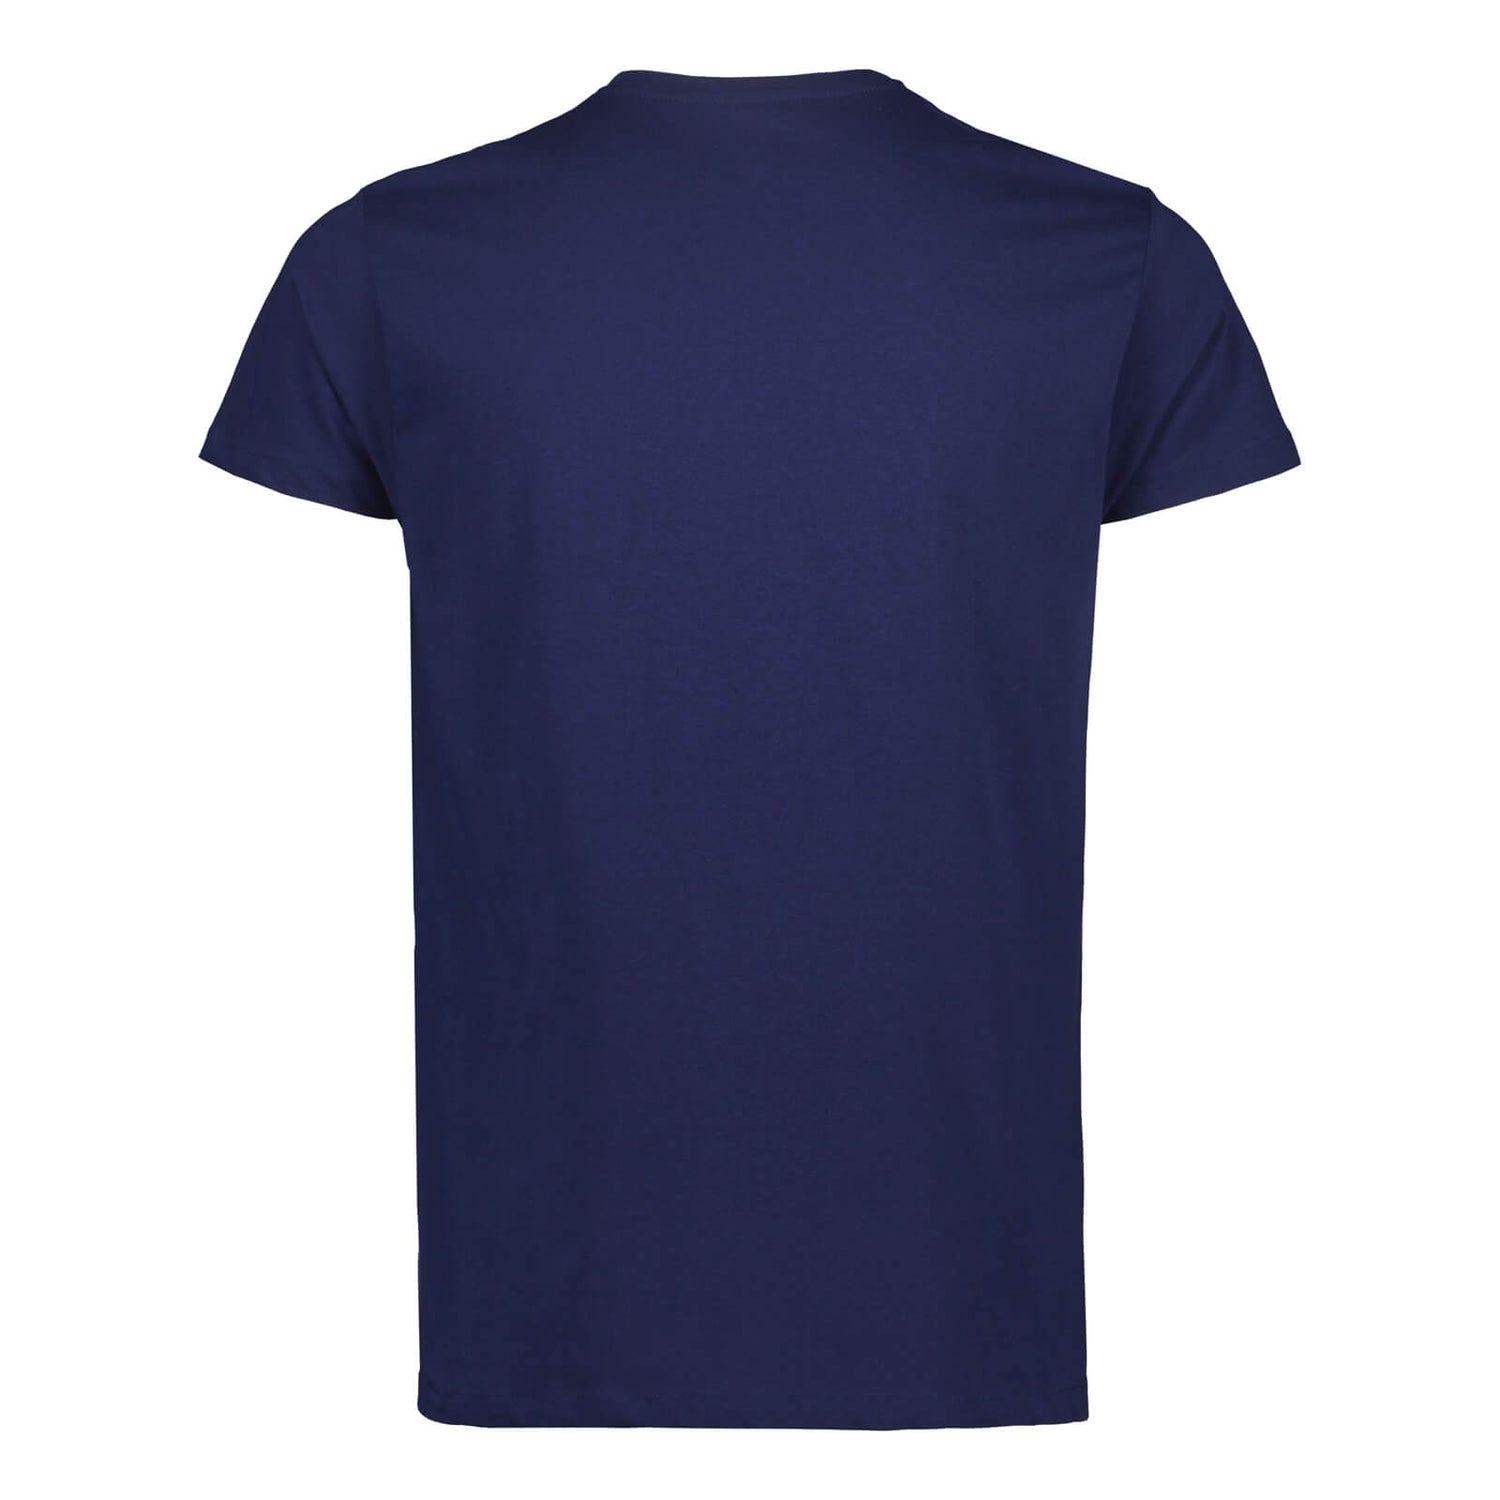 Danger Pohjanpalo T-shirt, Navy Blue